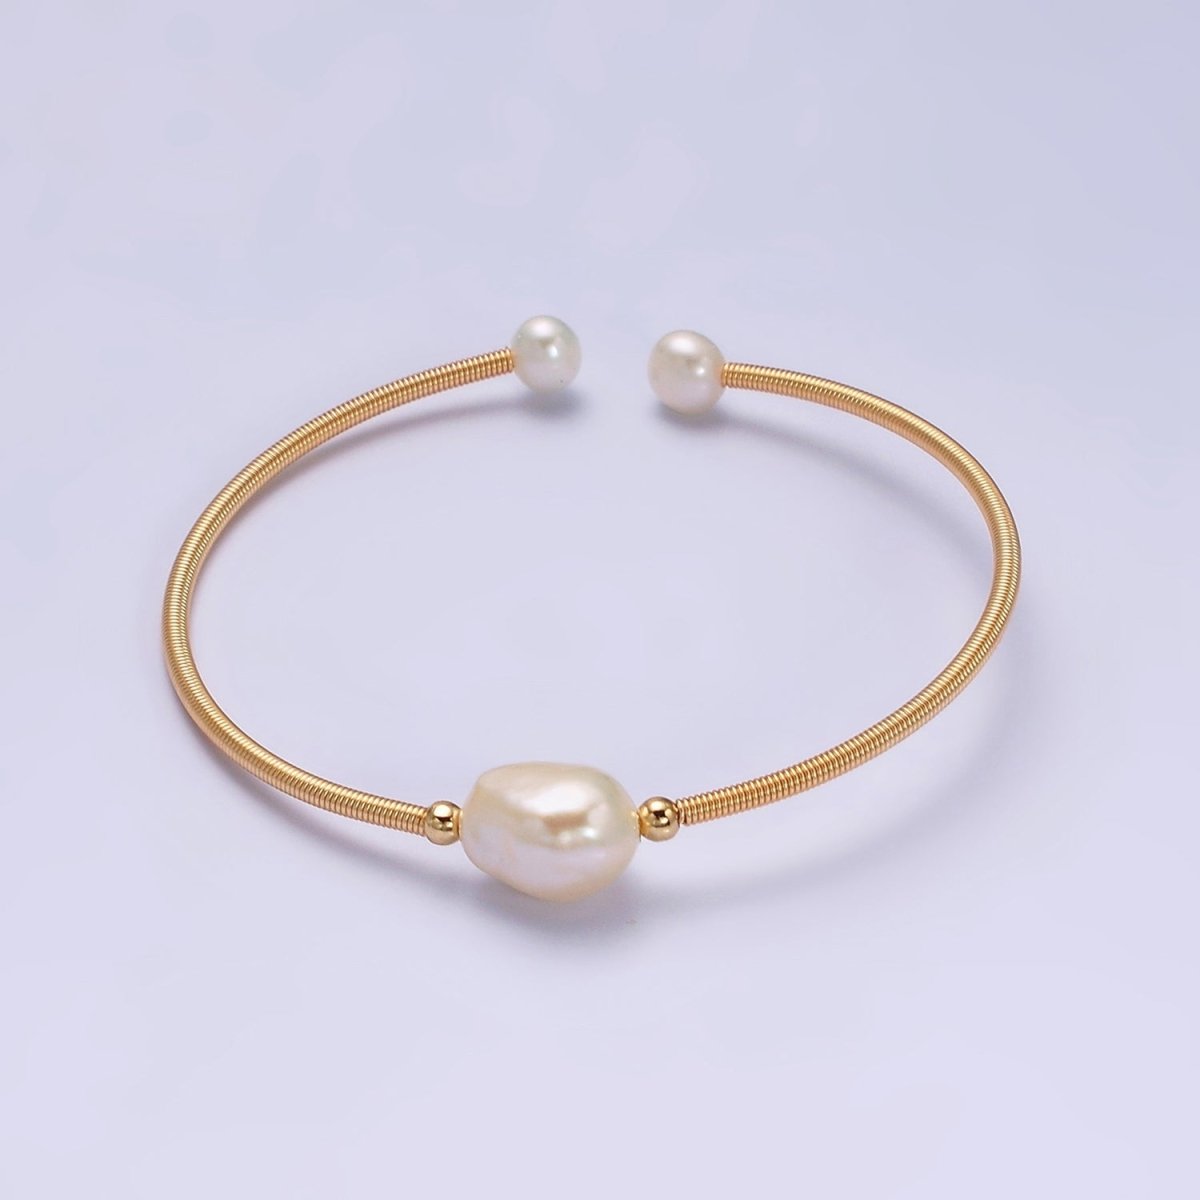 Floating Pearl Cuff Bracelet - White Pink Pearl Bangle - Gold Pearl Bracelet Minimalist jewelry | WA-1862 WA-1863 Clearance Pricing - DLUXCA